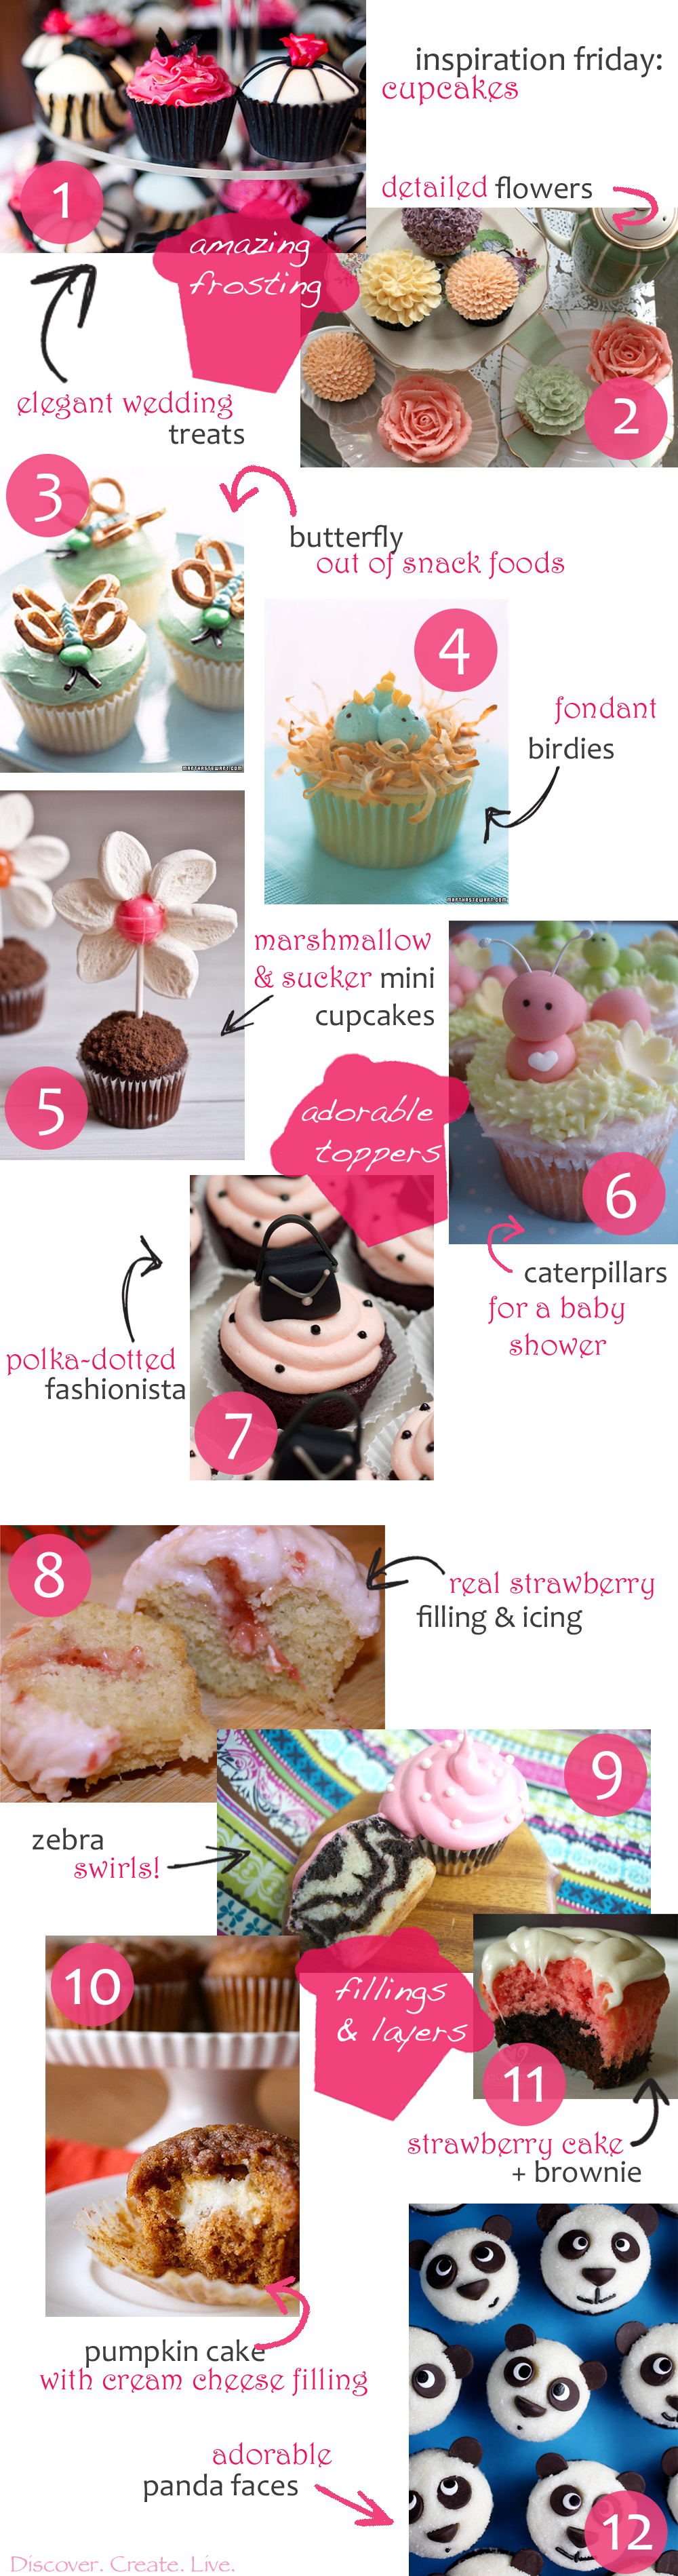 Inspiration Friday: Cupcakes